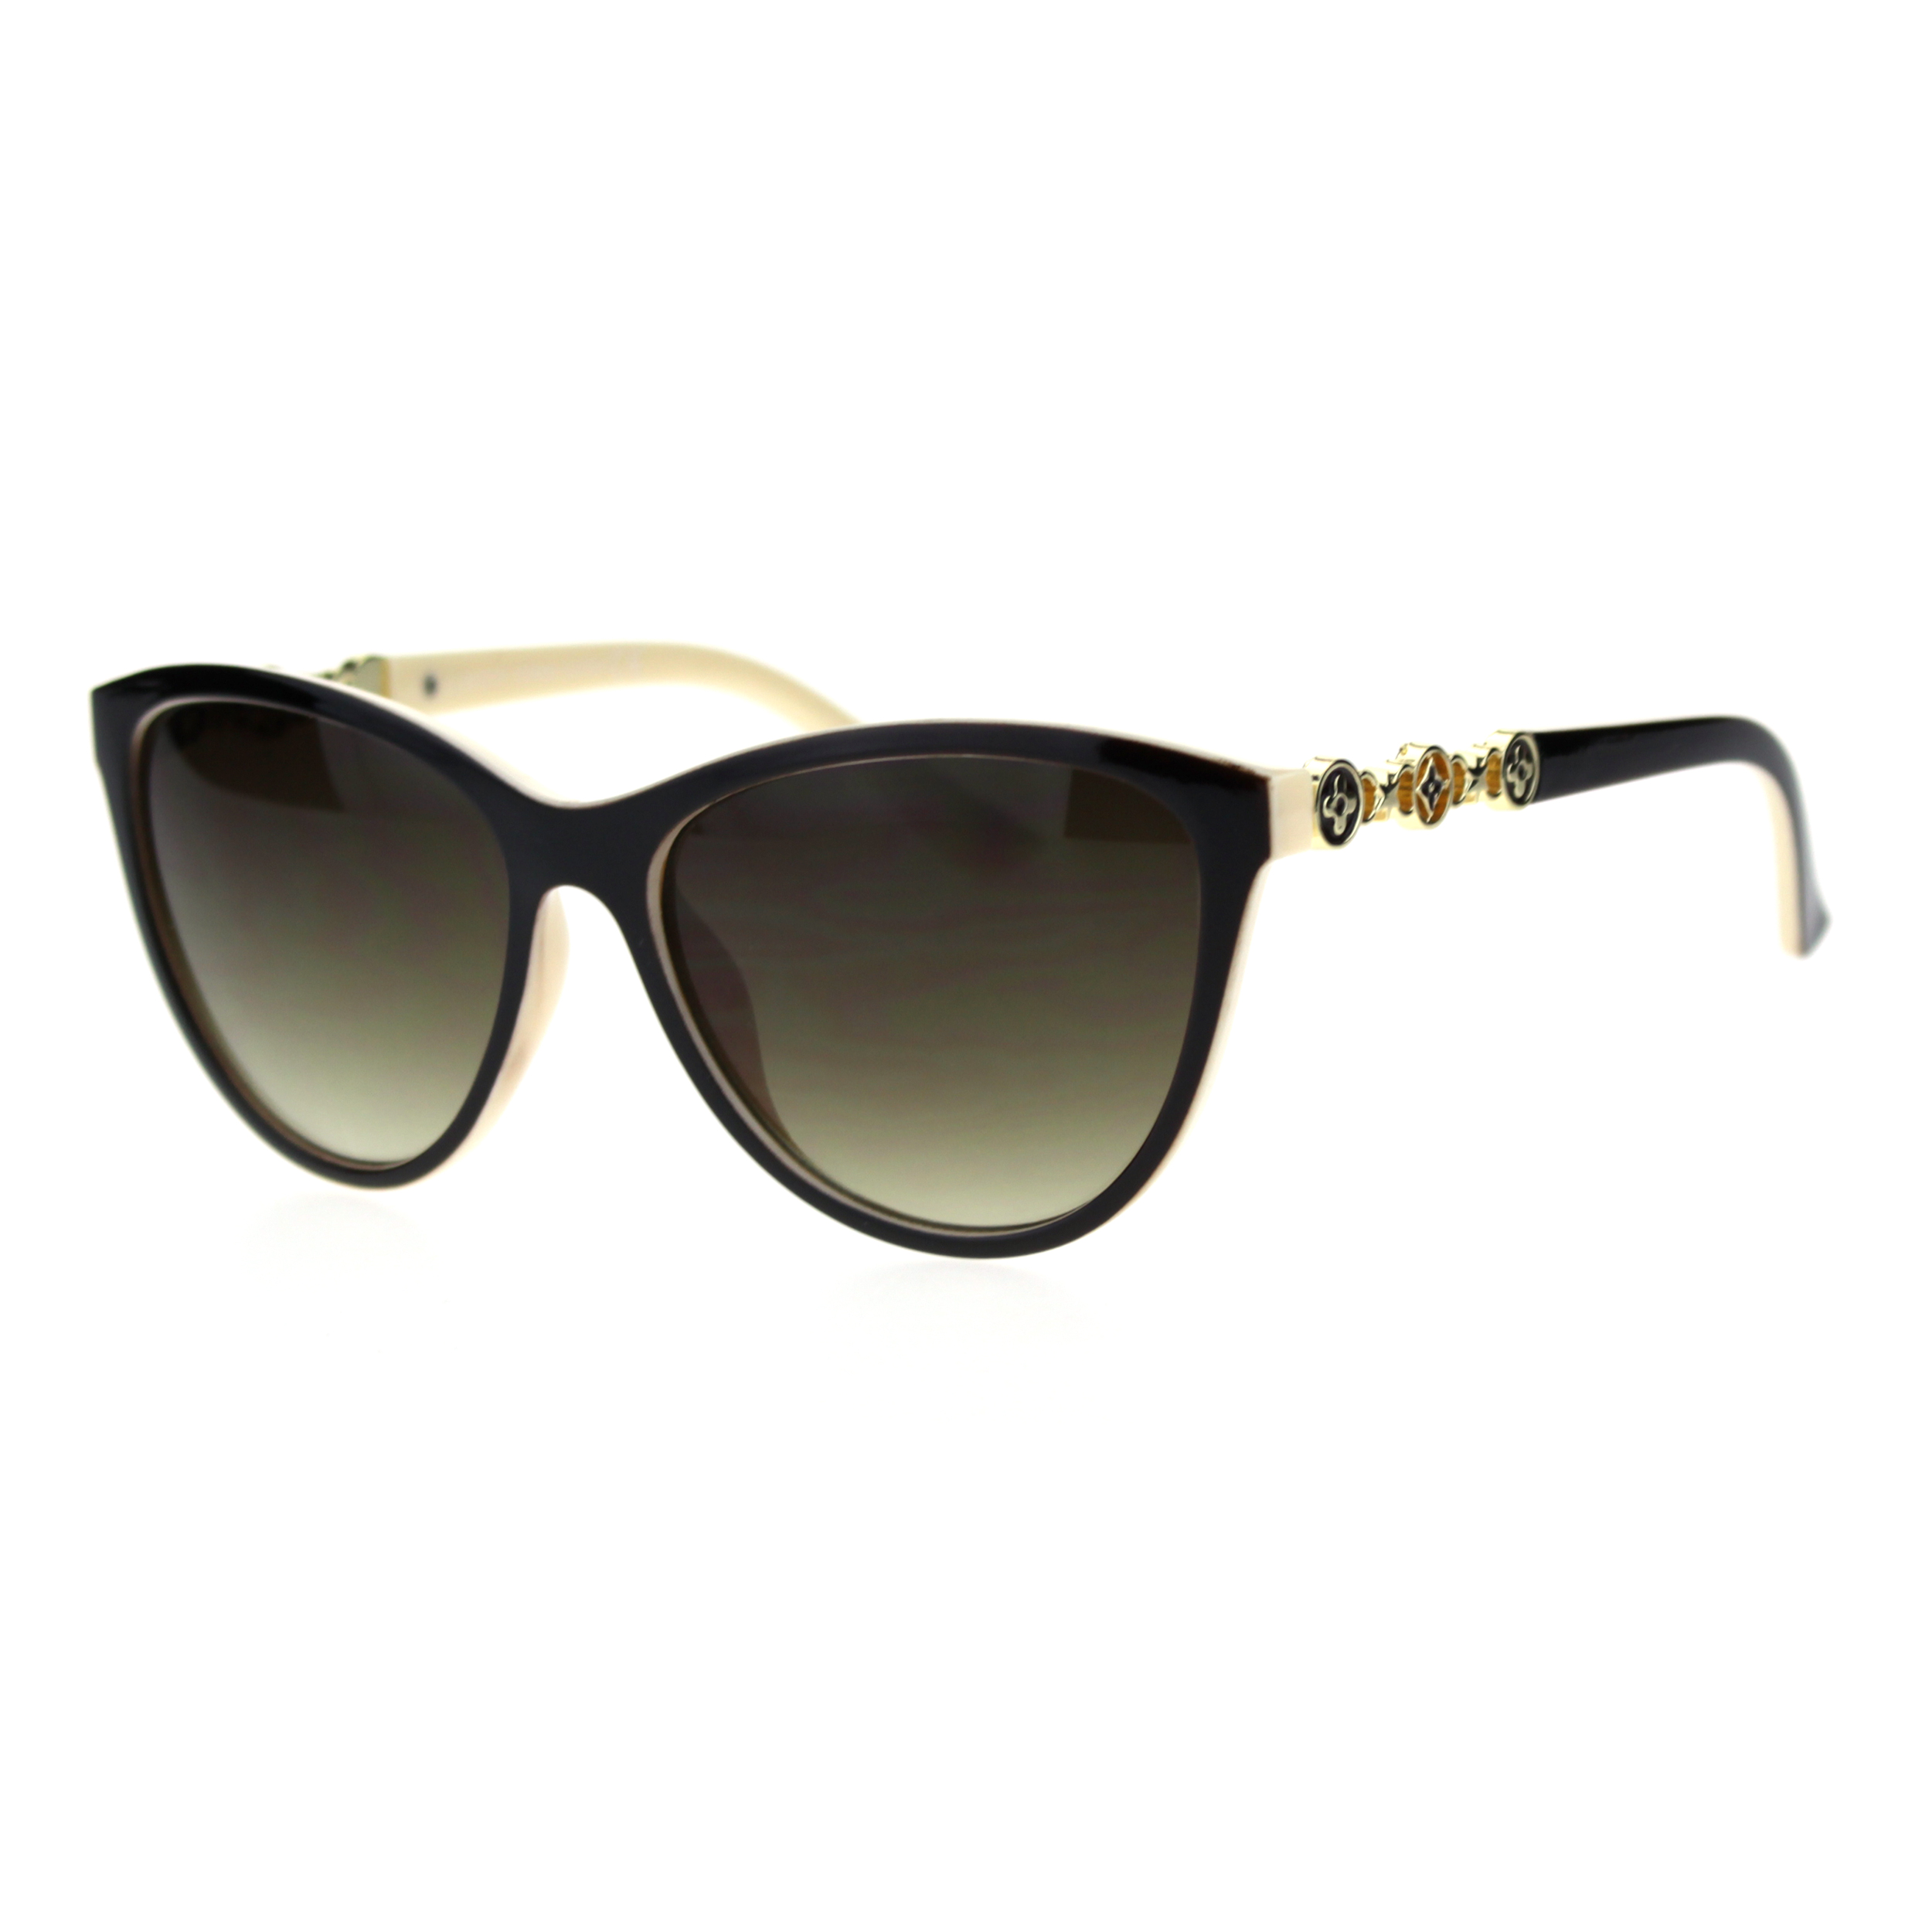 Womens Luxury Designer Fashion Cat Eye Chic Sunglasses Brown Beige Brown - image 1 of 4